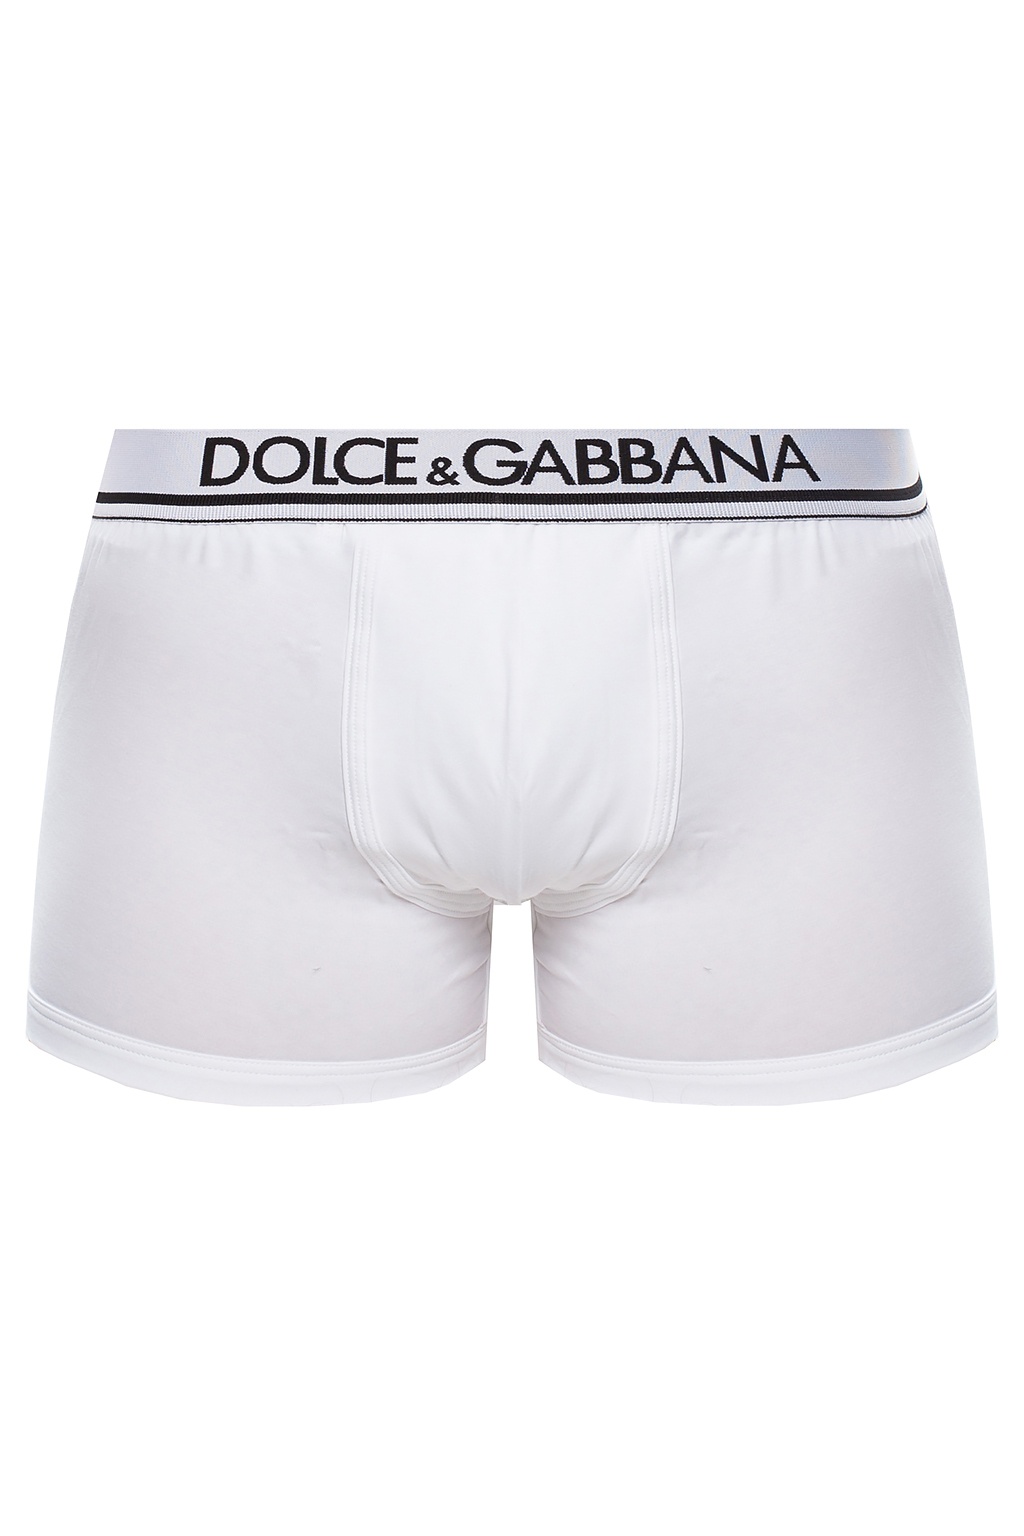 dolce and gabbana underwear size chart